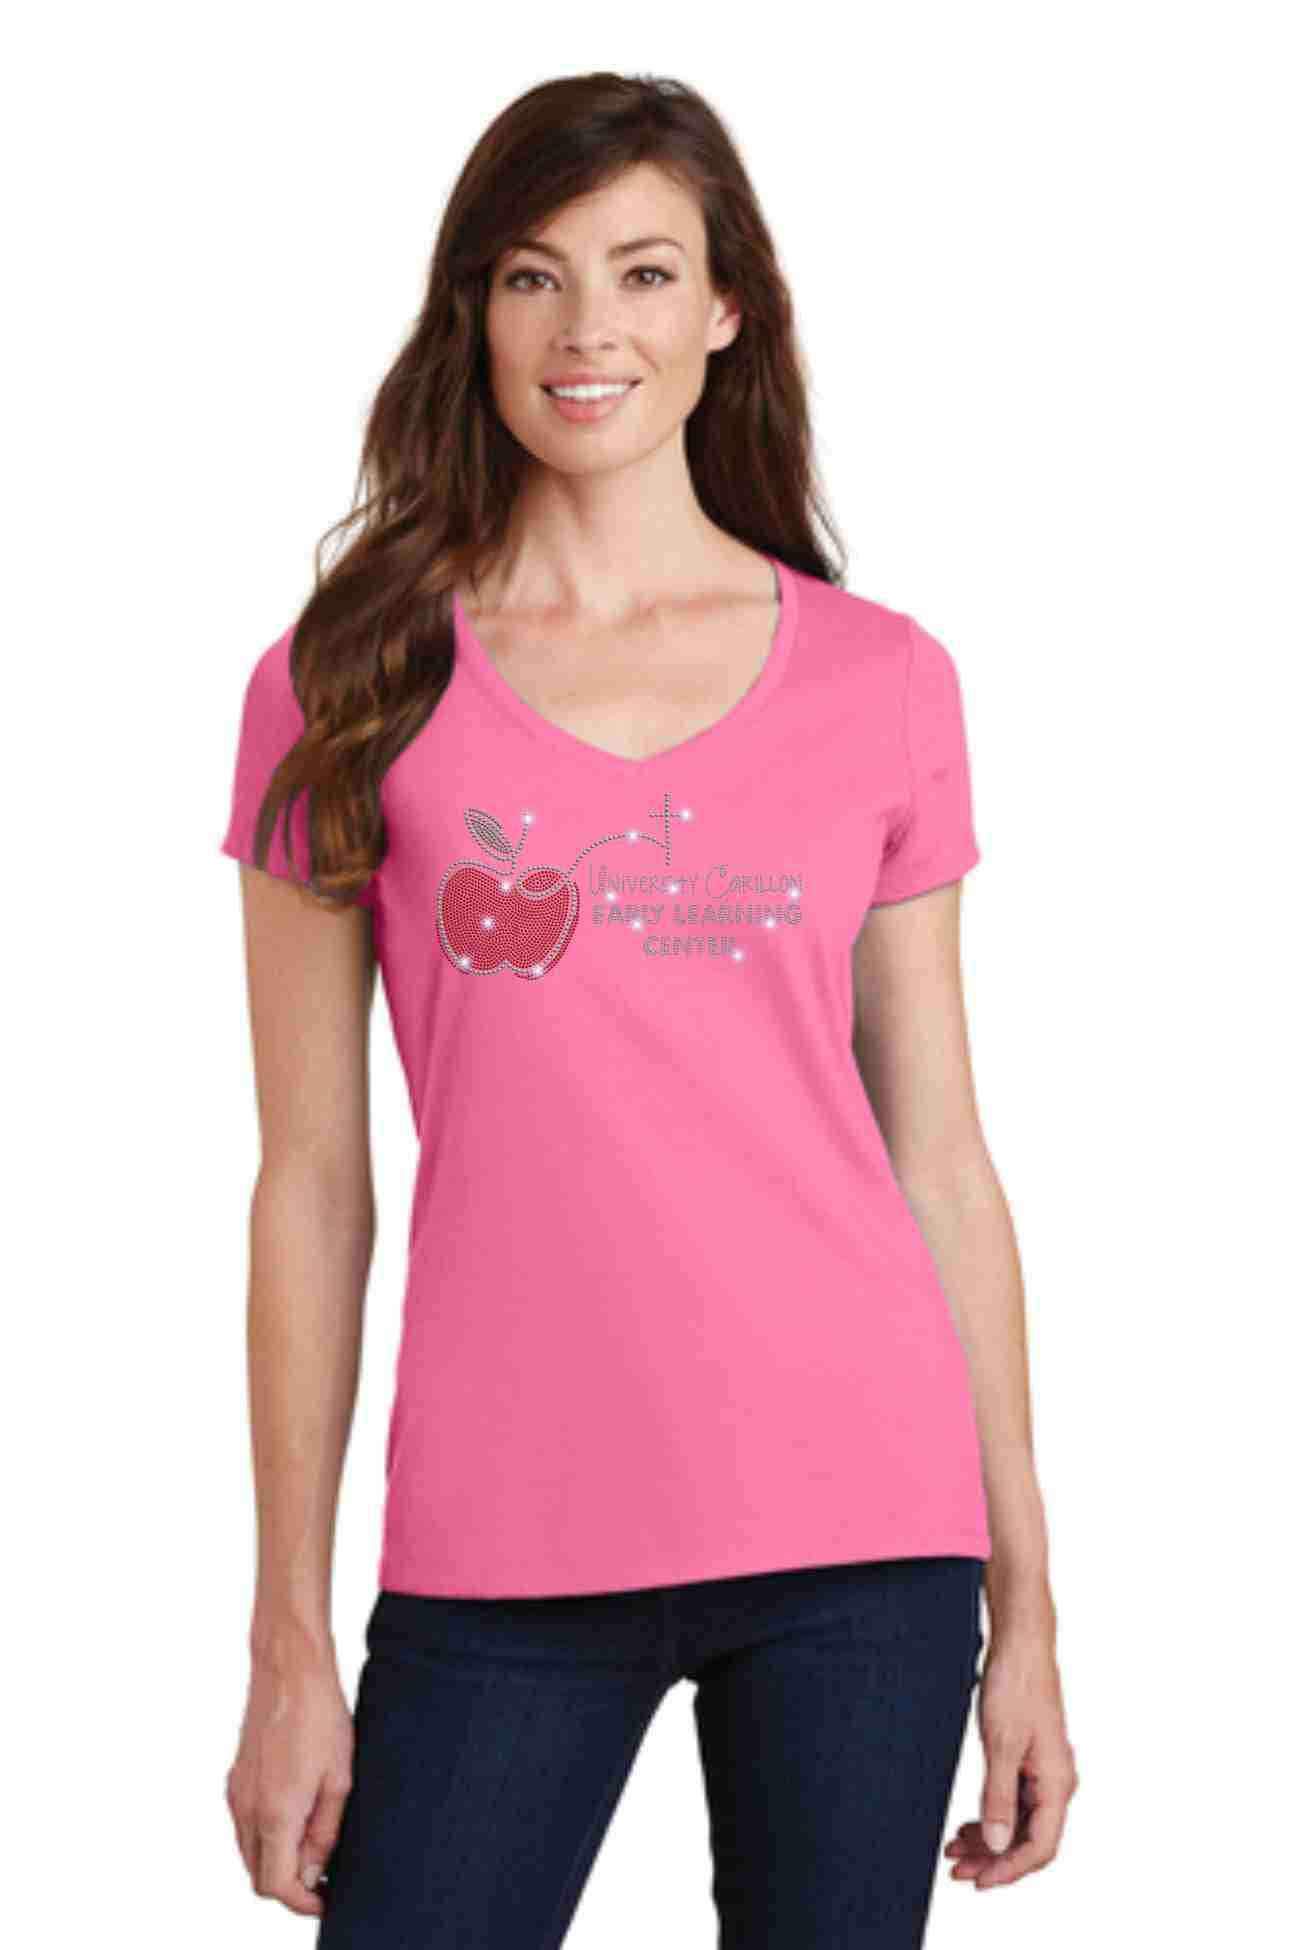 University Carillon Spangle Rhinestone Bling shirt - v-neck Schools Becky's Boutique XS Pink 